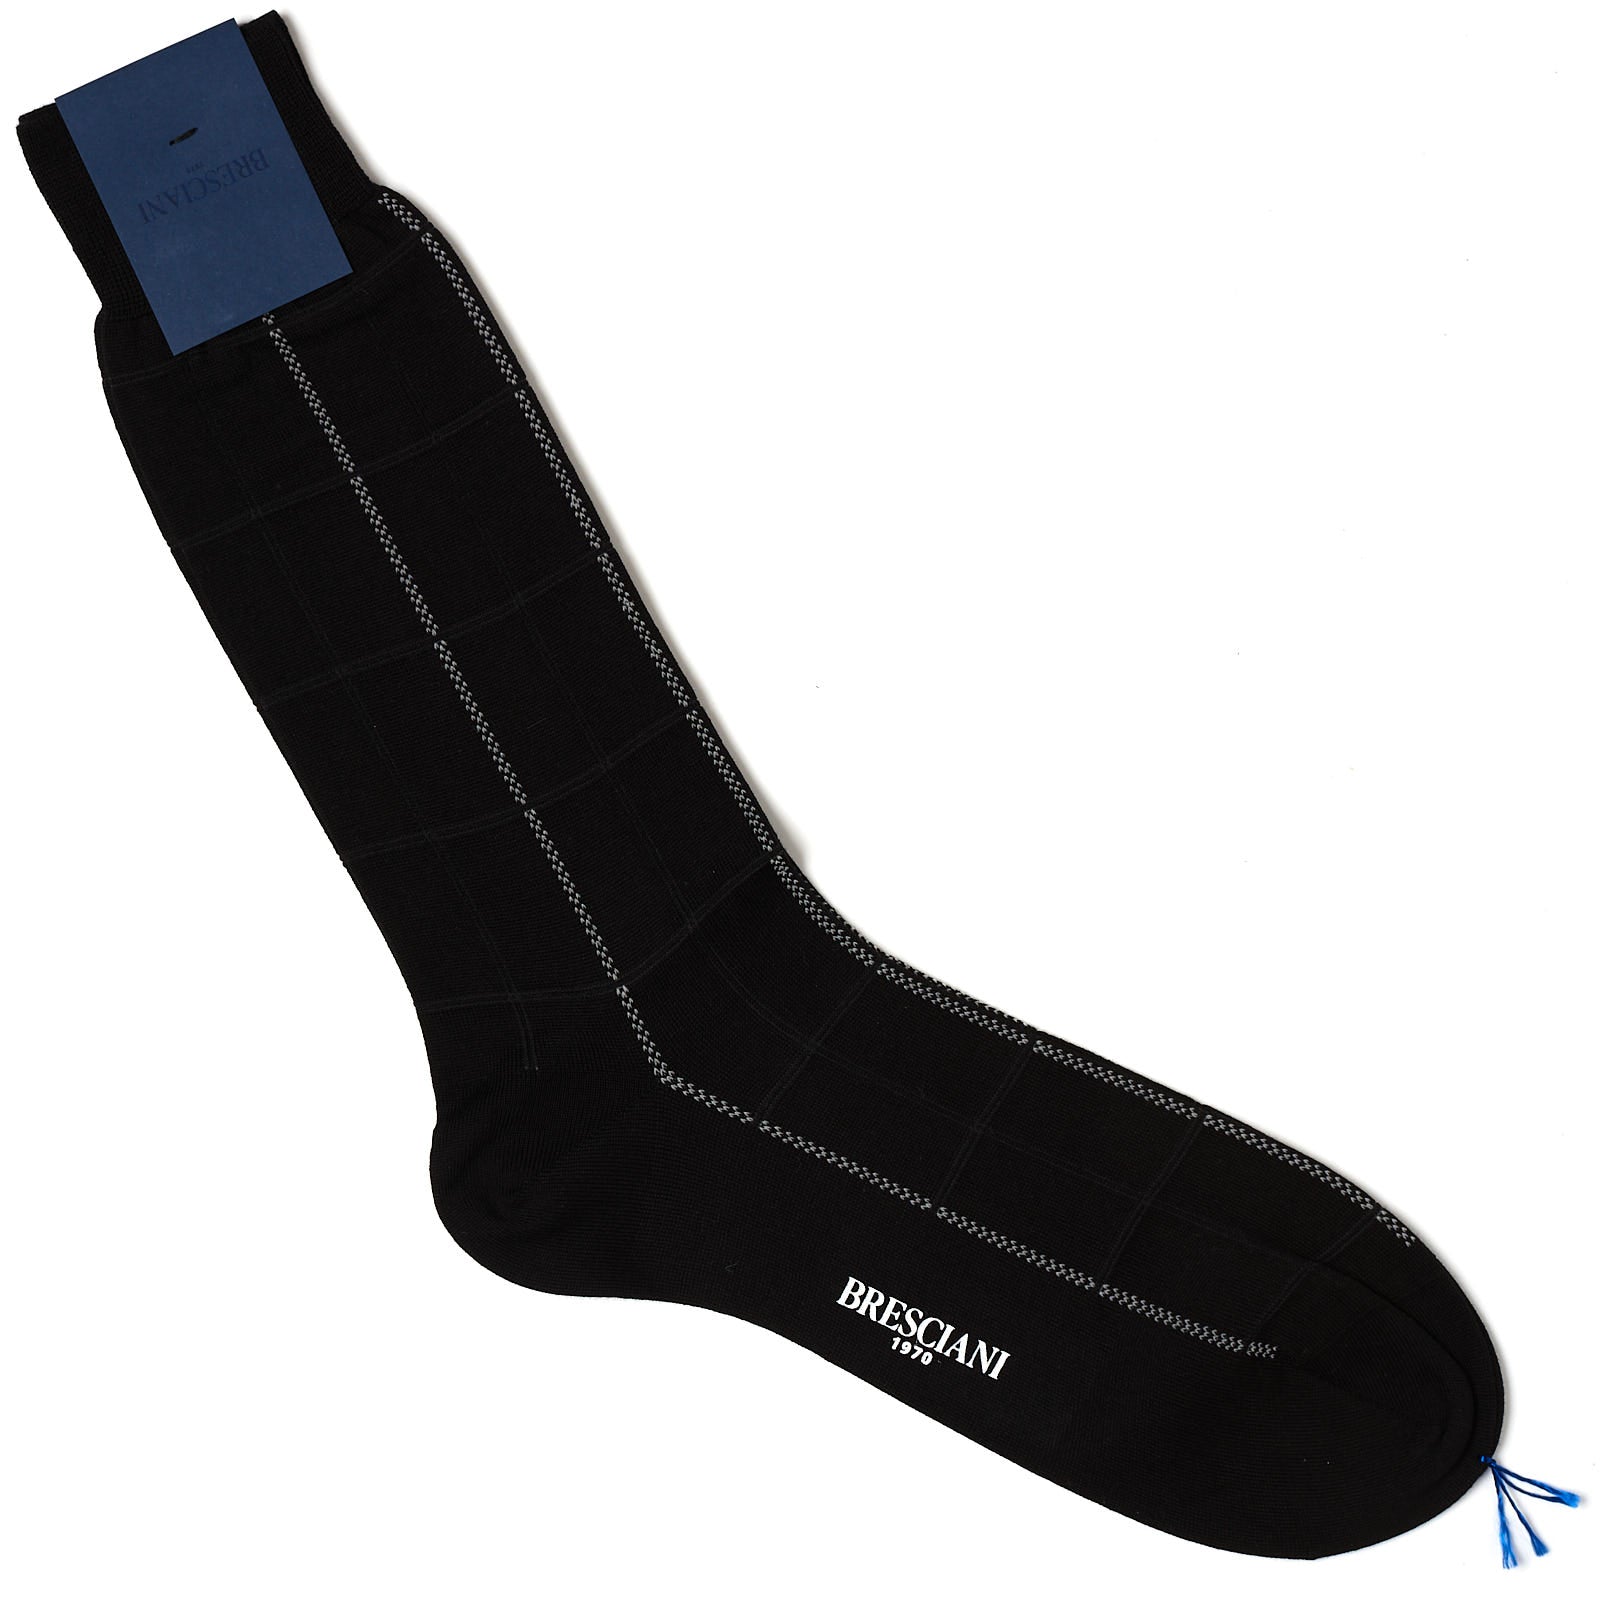 BRESCIANI Cotton Geometry Design Mid Calf Length Socks US M-L BRESCIANI